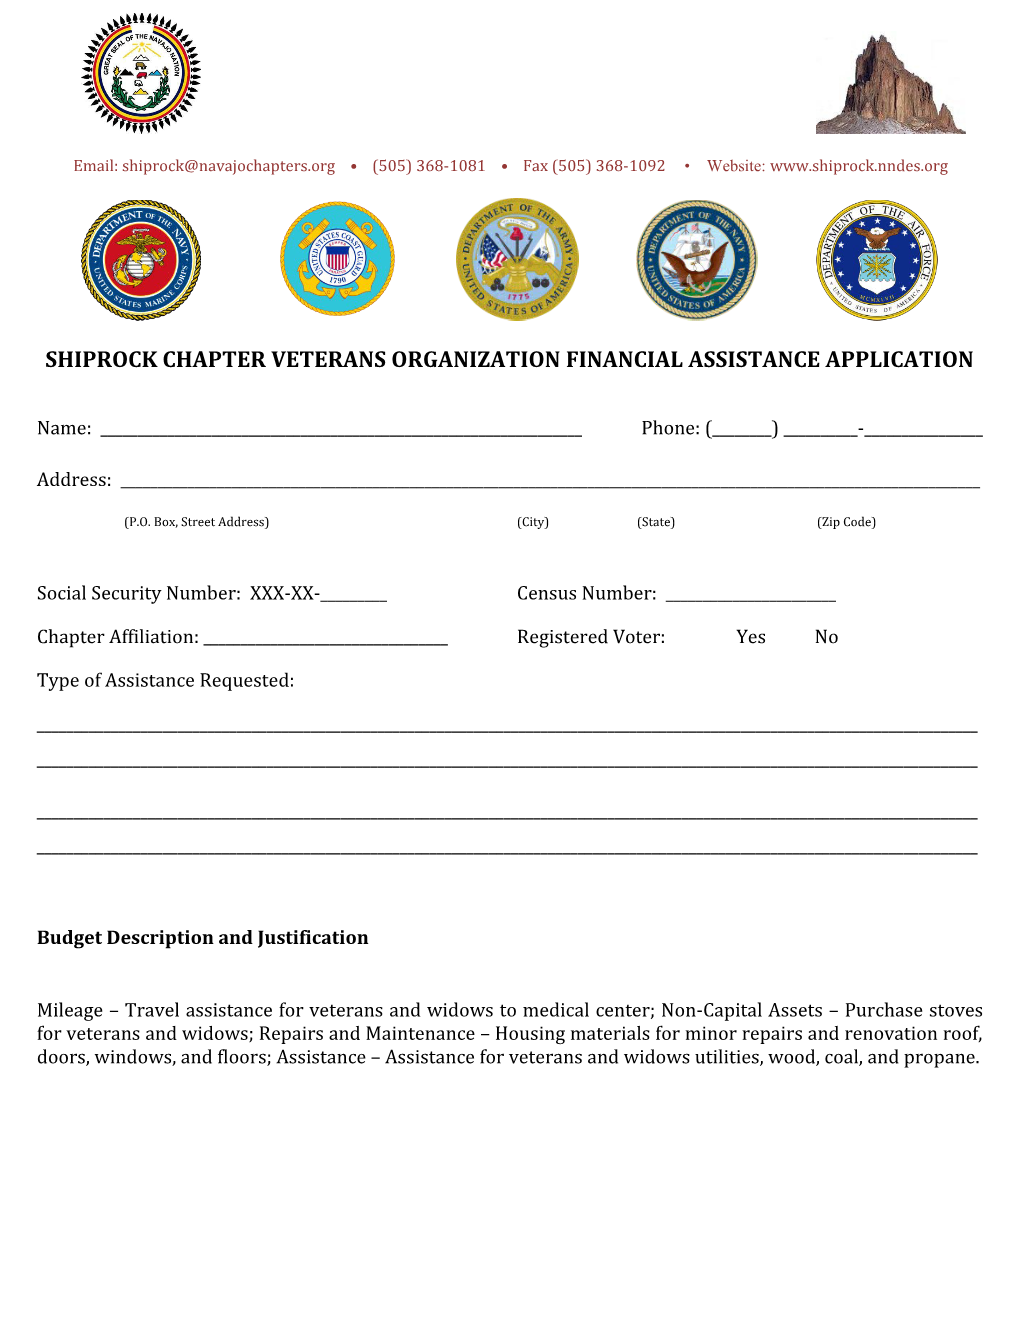 Shiprock Chapter Veterans Organization Financial Assistance Application